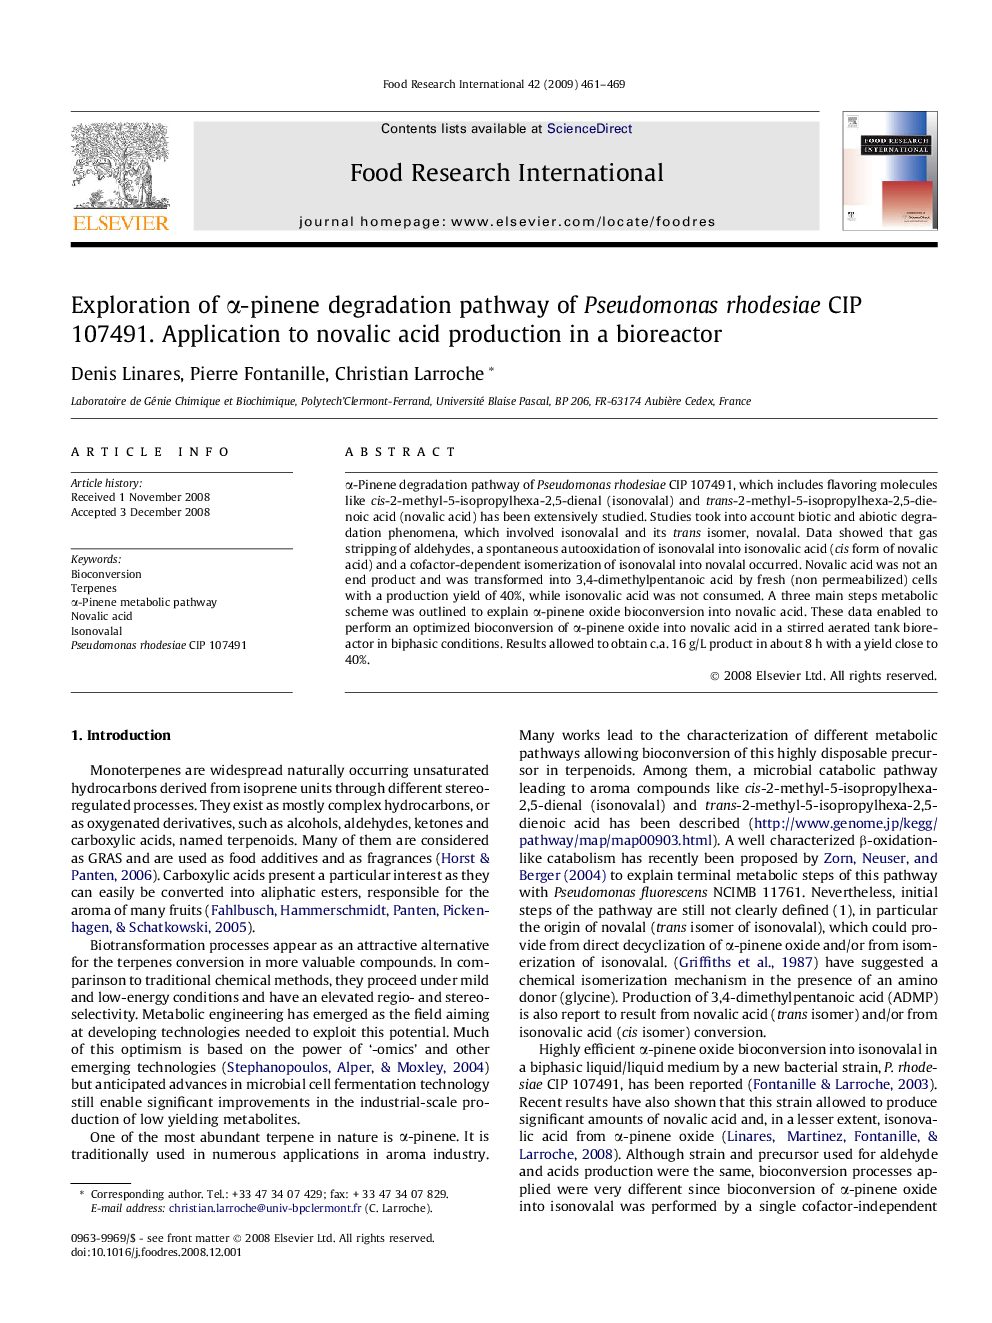 Exploration of α-pinene degradation pathway of Pseudomonas rhodesiae CIP 107491. Application to novalic acid production in a bioreactor